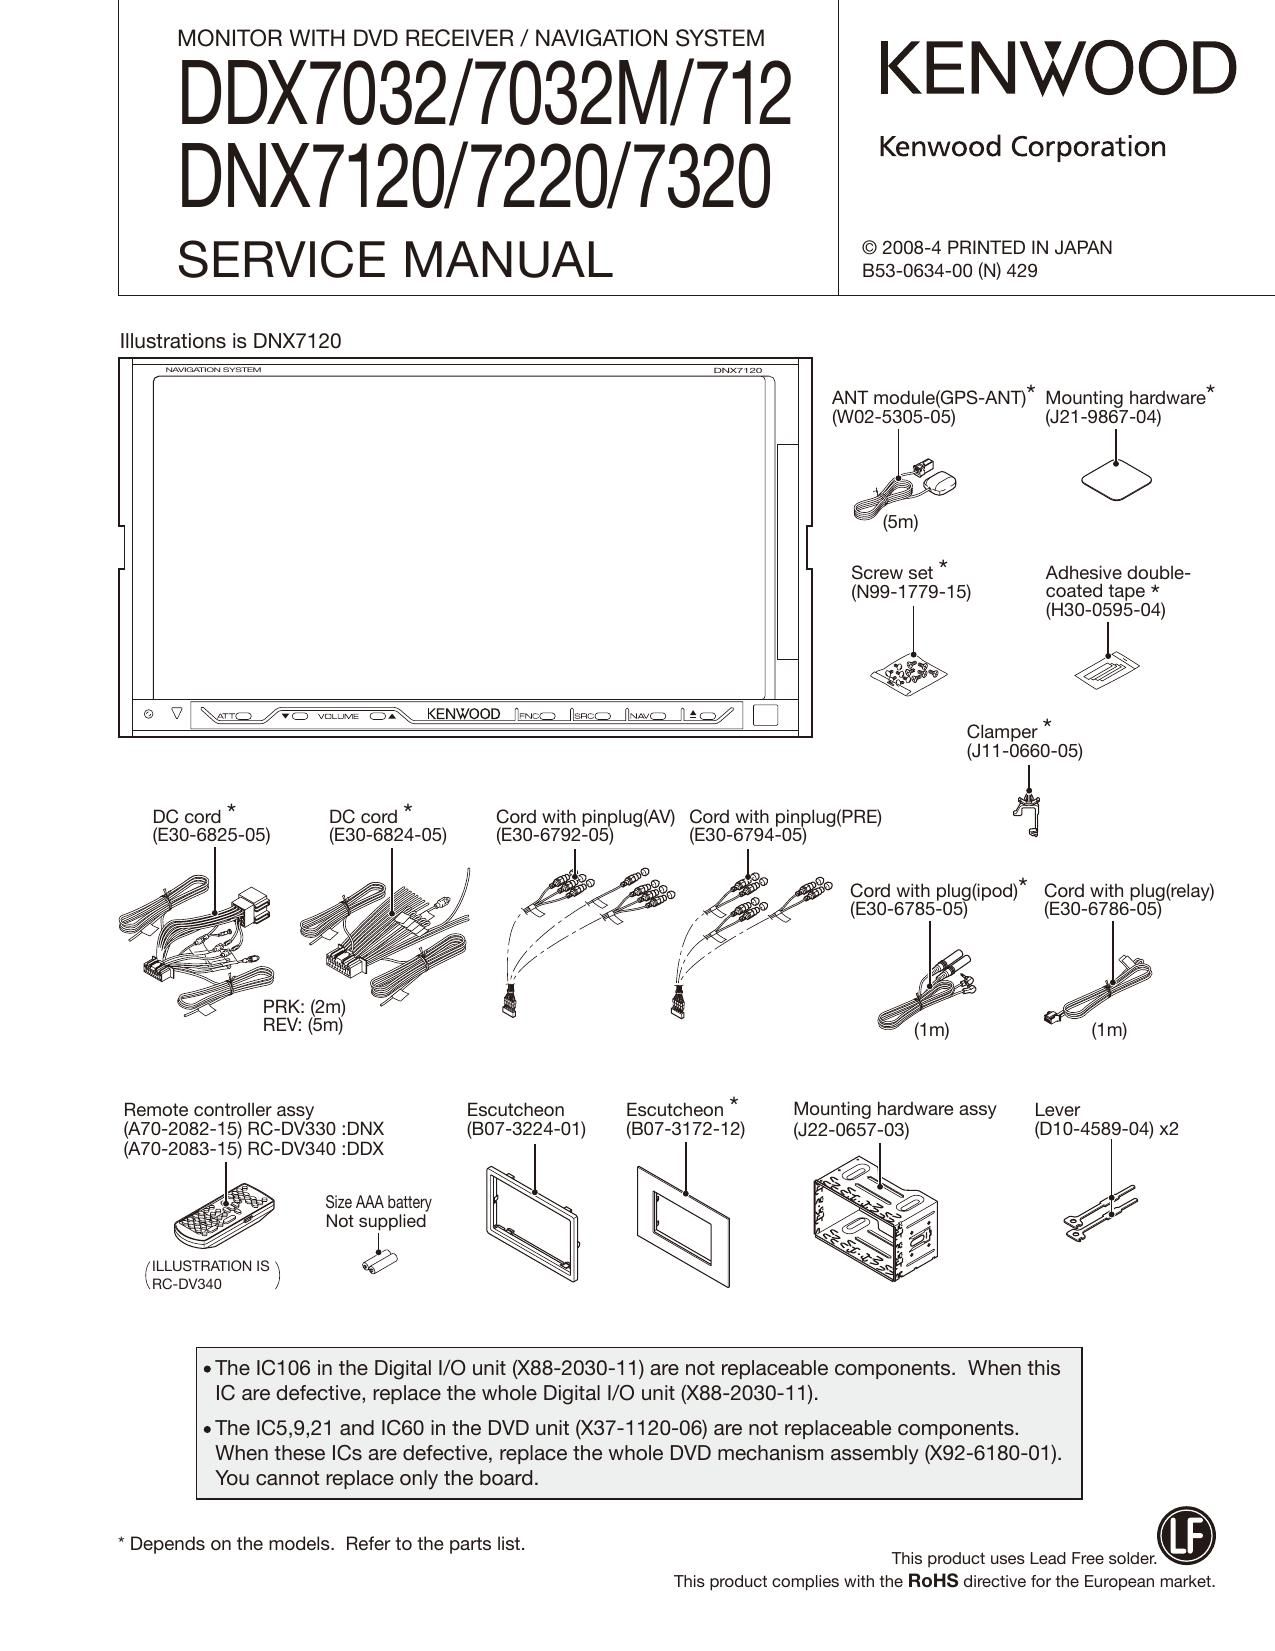 Kenwood DDX 7032 M Service Manual